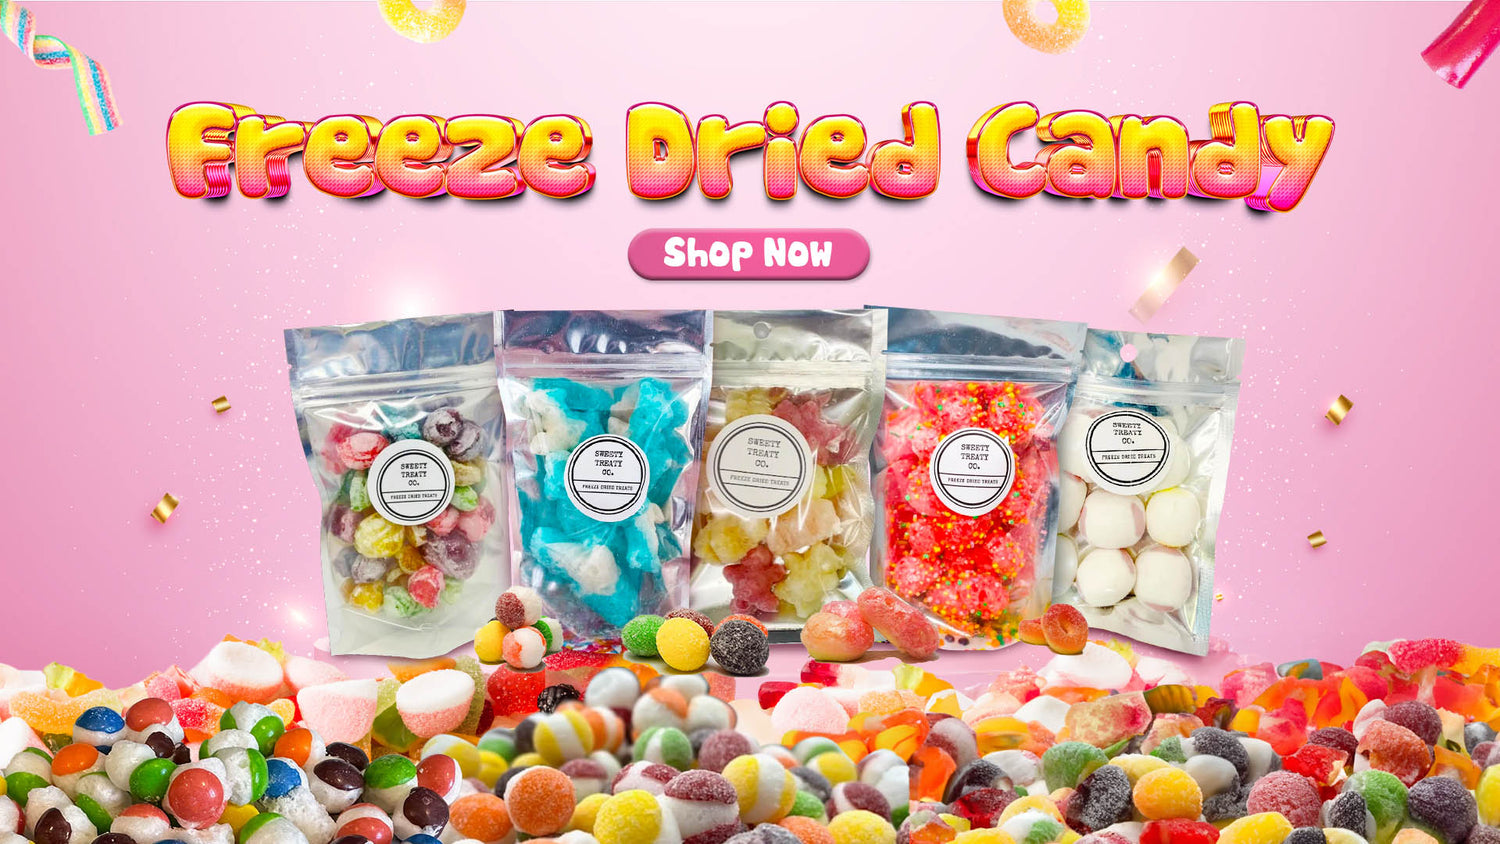 Lolly Kingdom - Australian Online Lolly Shop & Candy Store